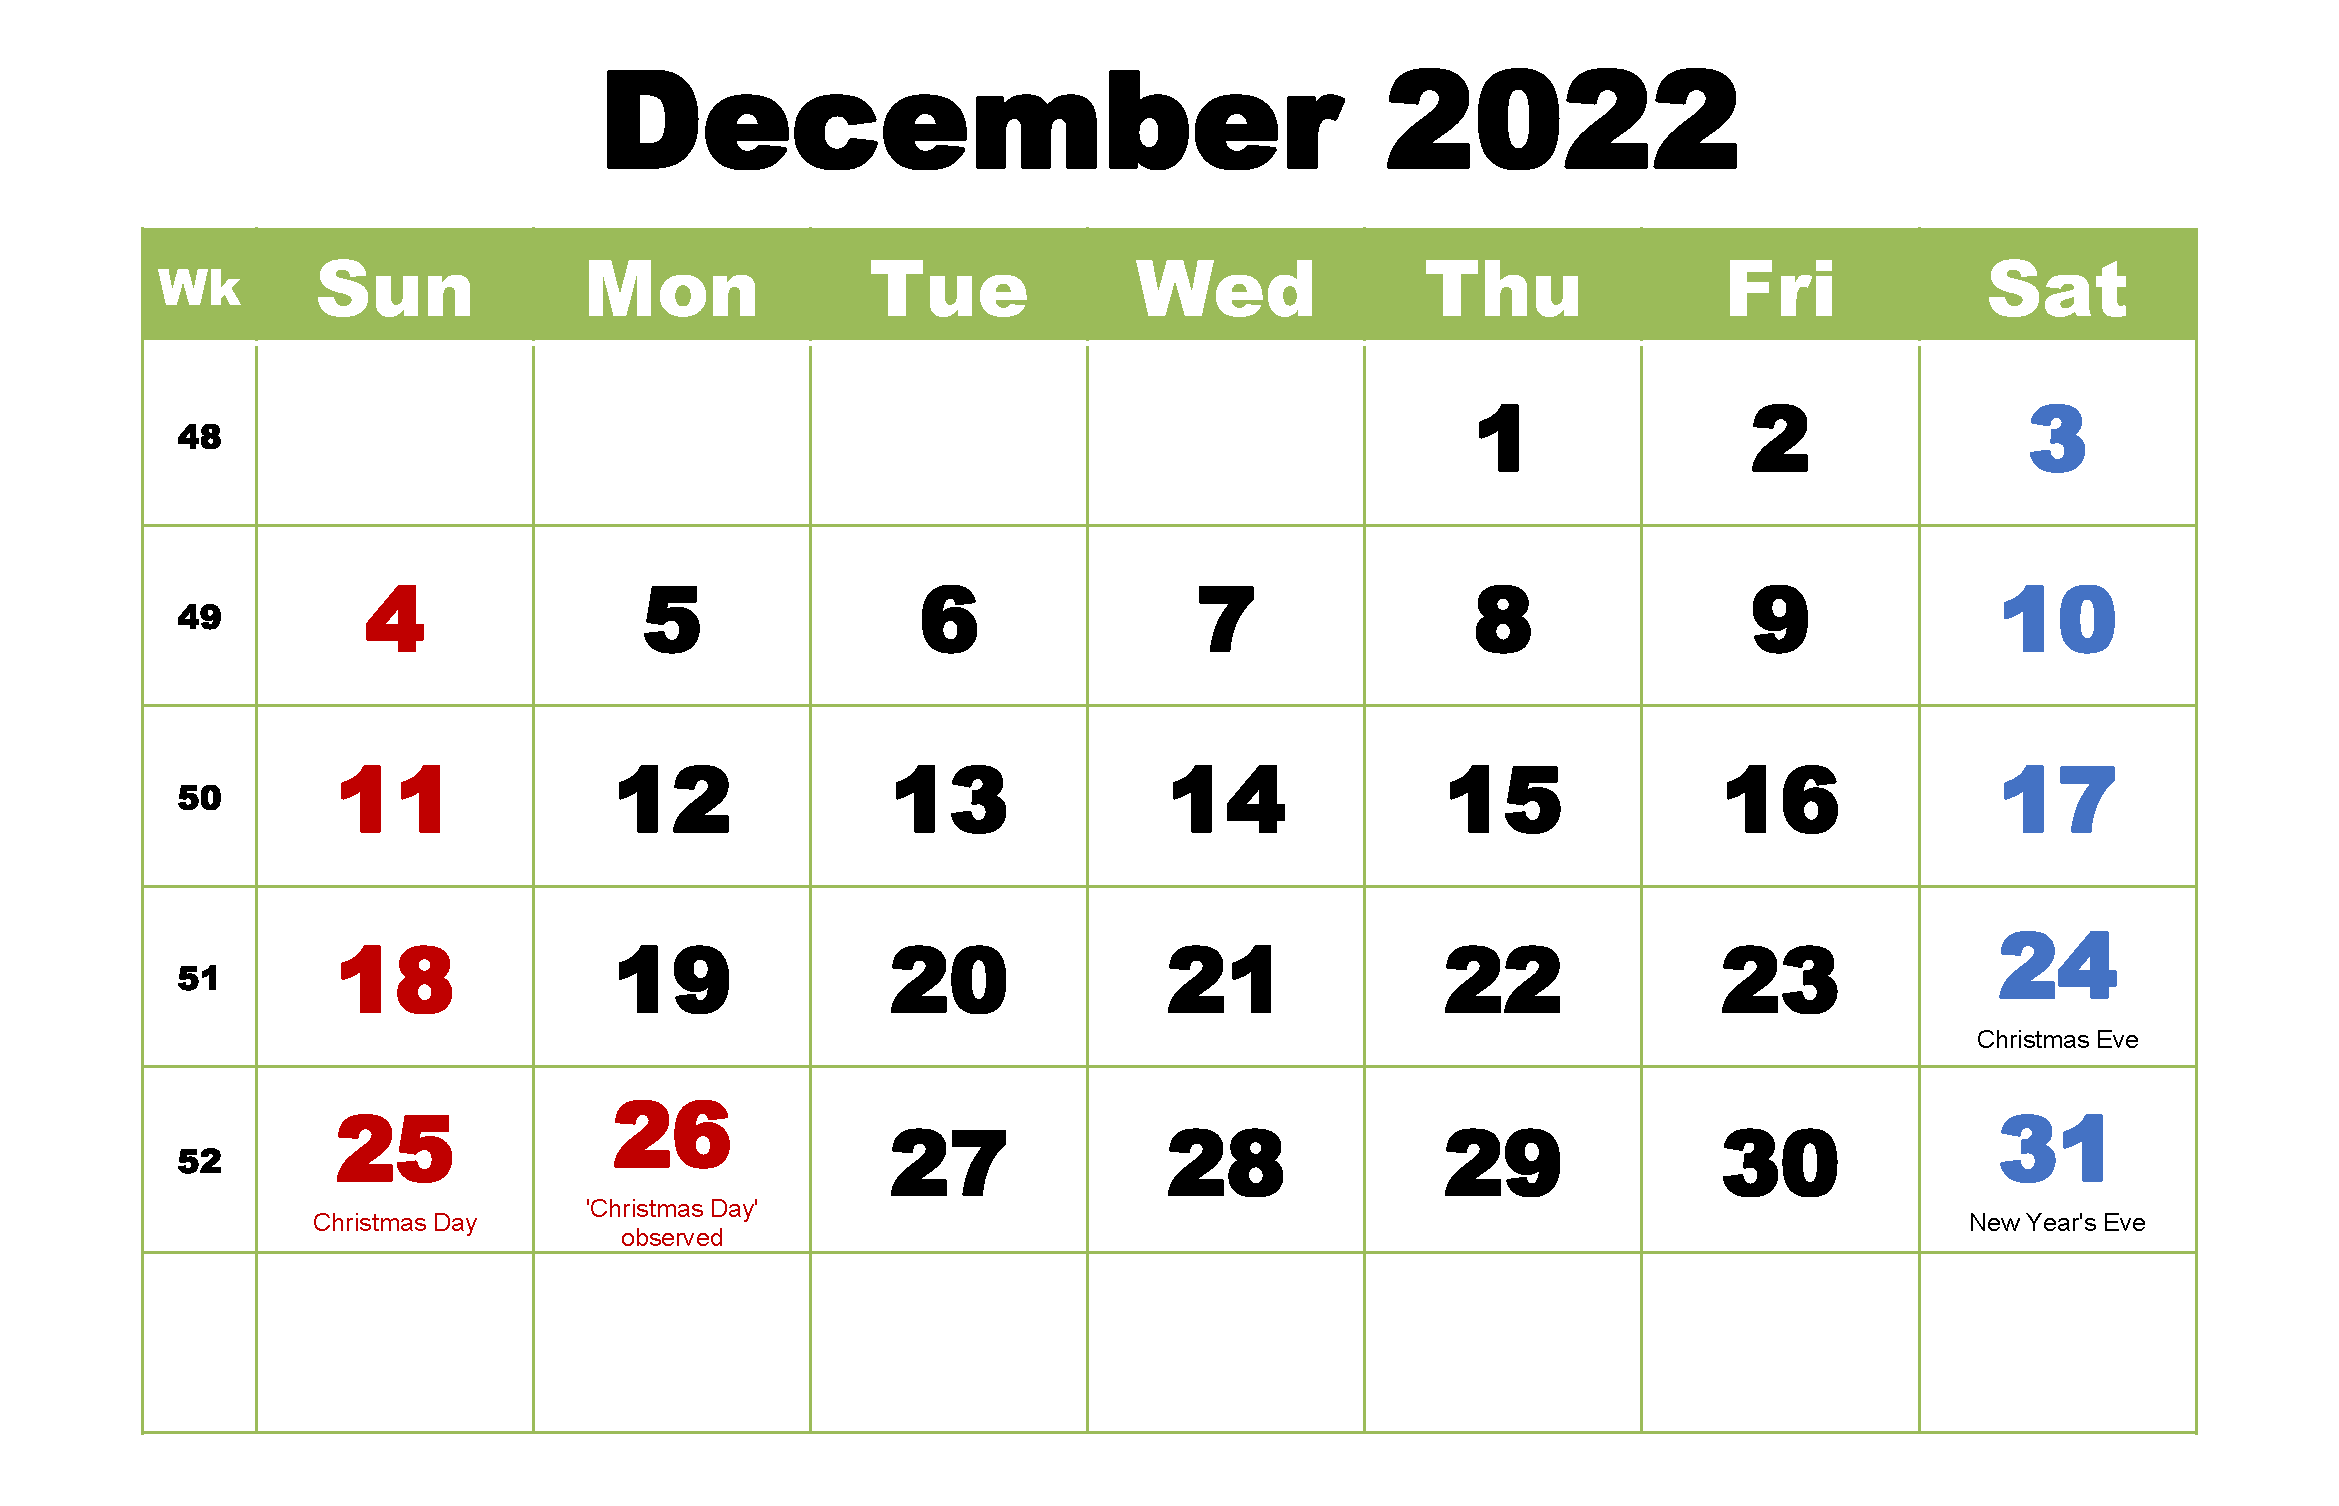 2022 December Calendar